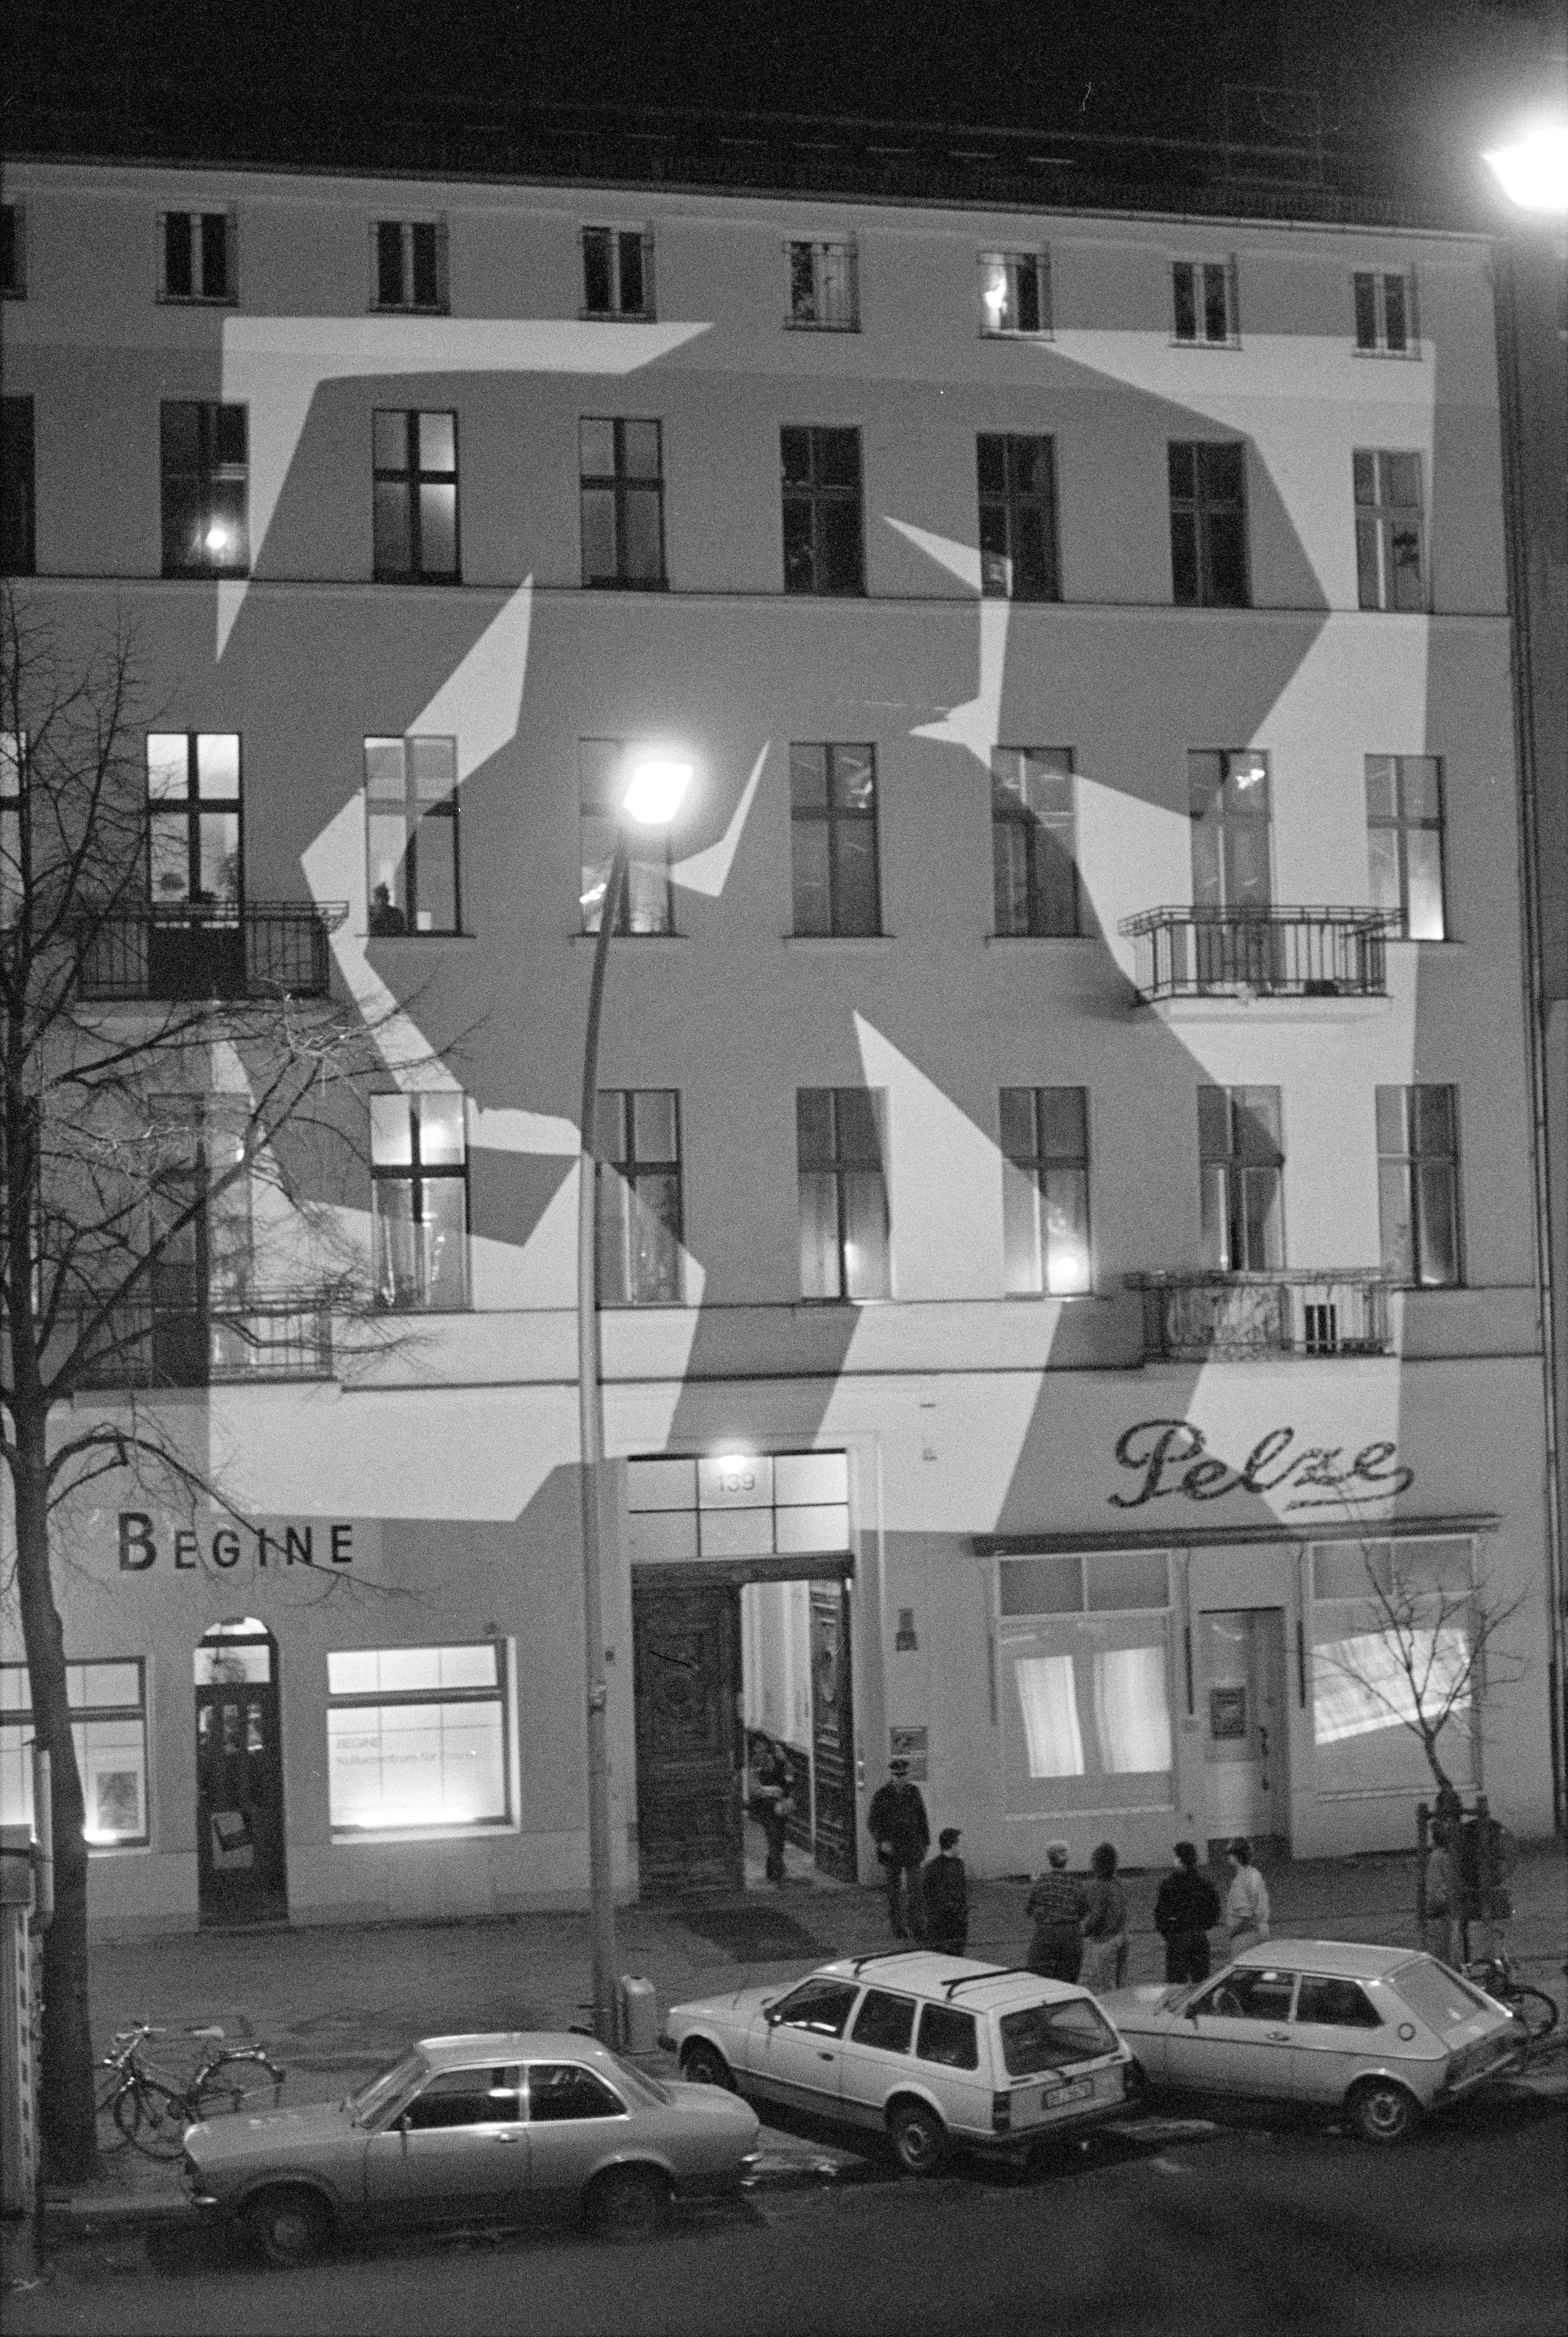 Pelze und Begine Projektionskunst "Berlin wird helle" 1987 K1 N1 (2023-09-18) (Schwules Museum RR-F)